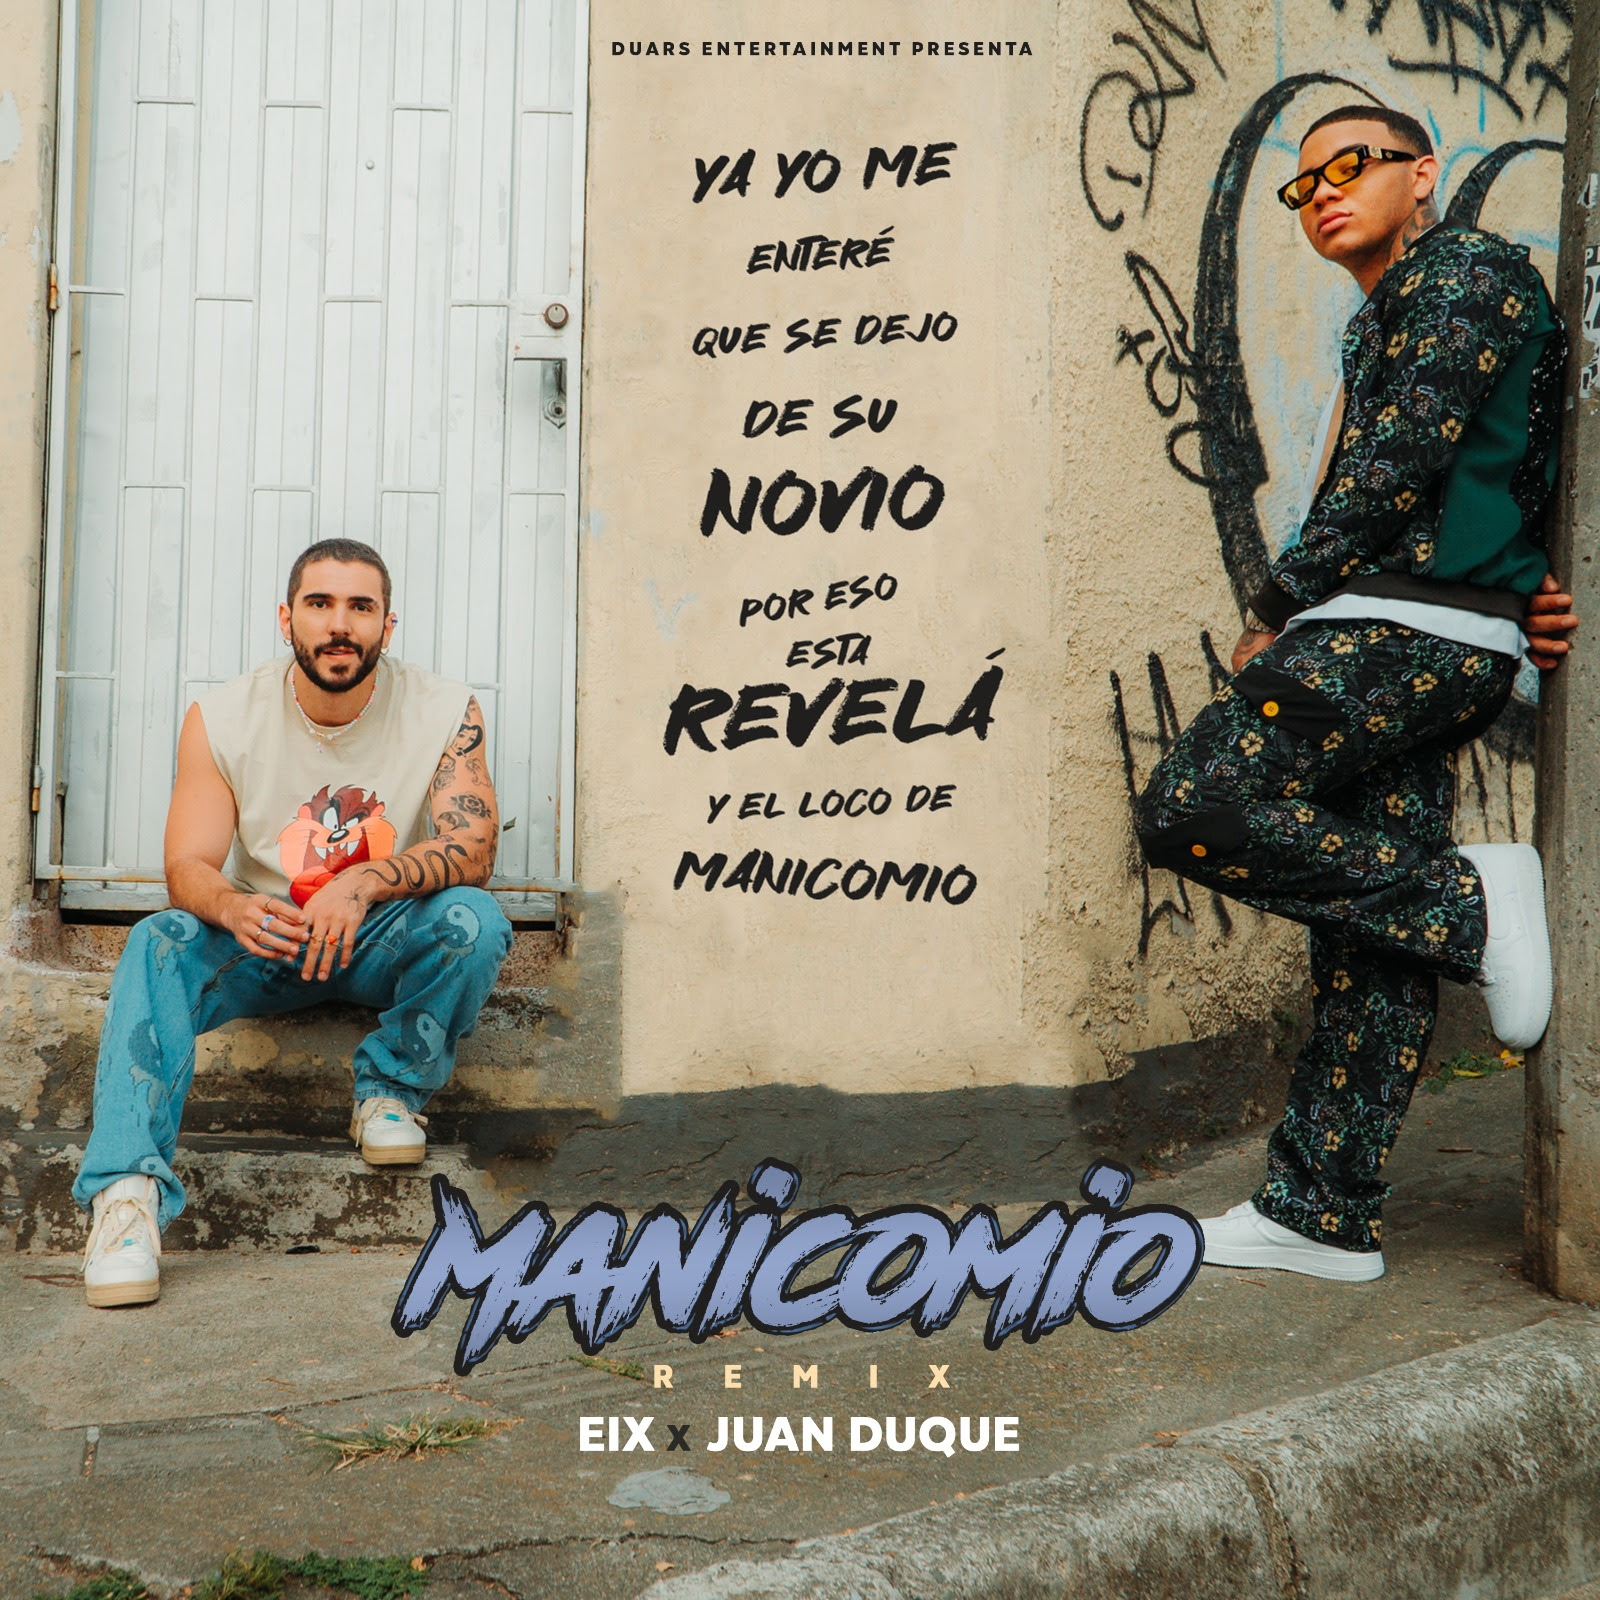 Eix estrena el remix de ¨Manicomio¨ junto al artista colombiano Juan Duque